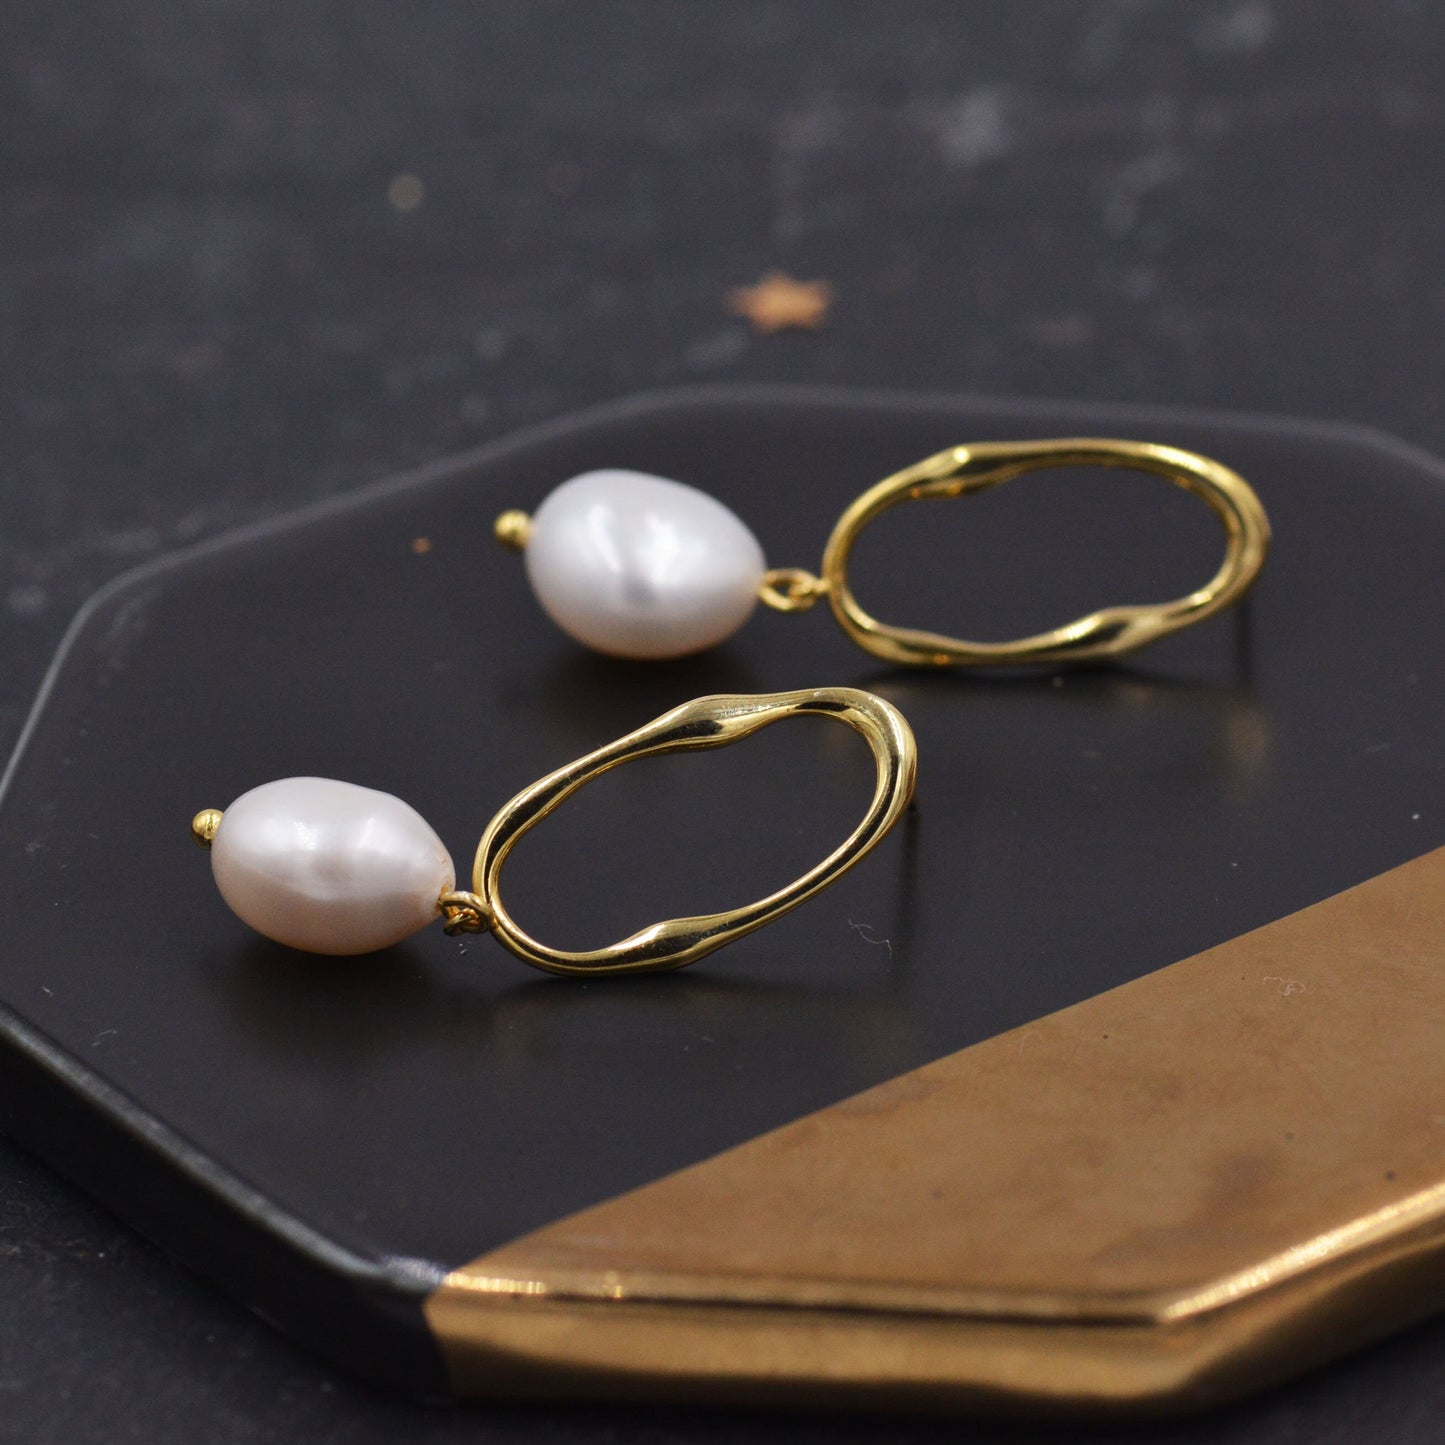 Sterling Silver Irregular Hoop Drop Stud Earrings with Baroque Pearls, Genuine Freshwater Pearls, 18ct Gold Plated Silver